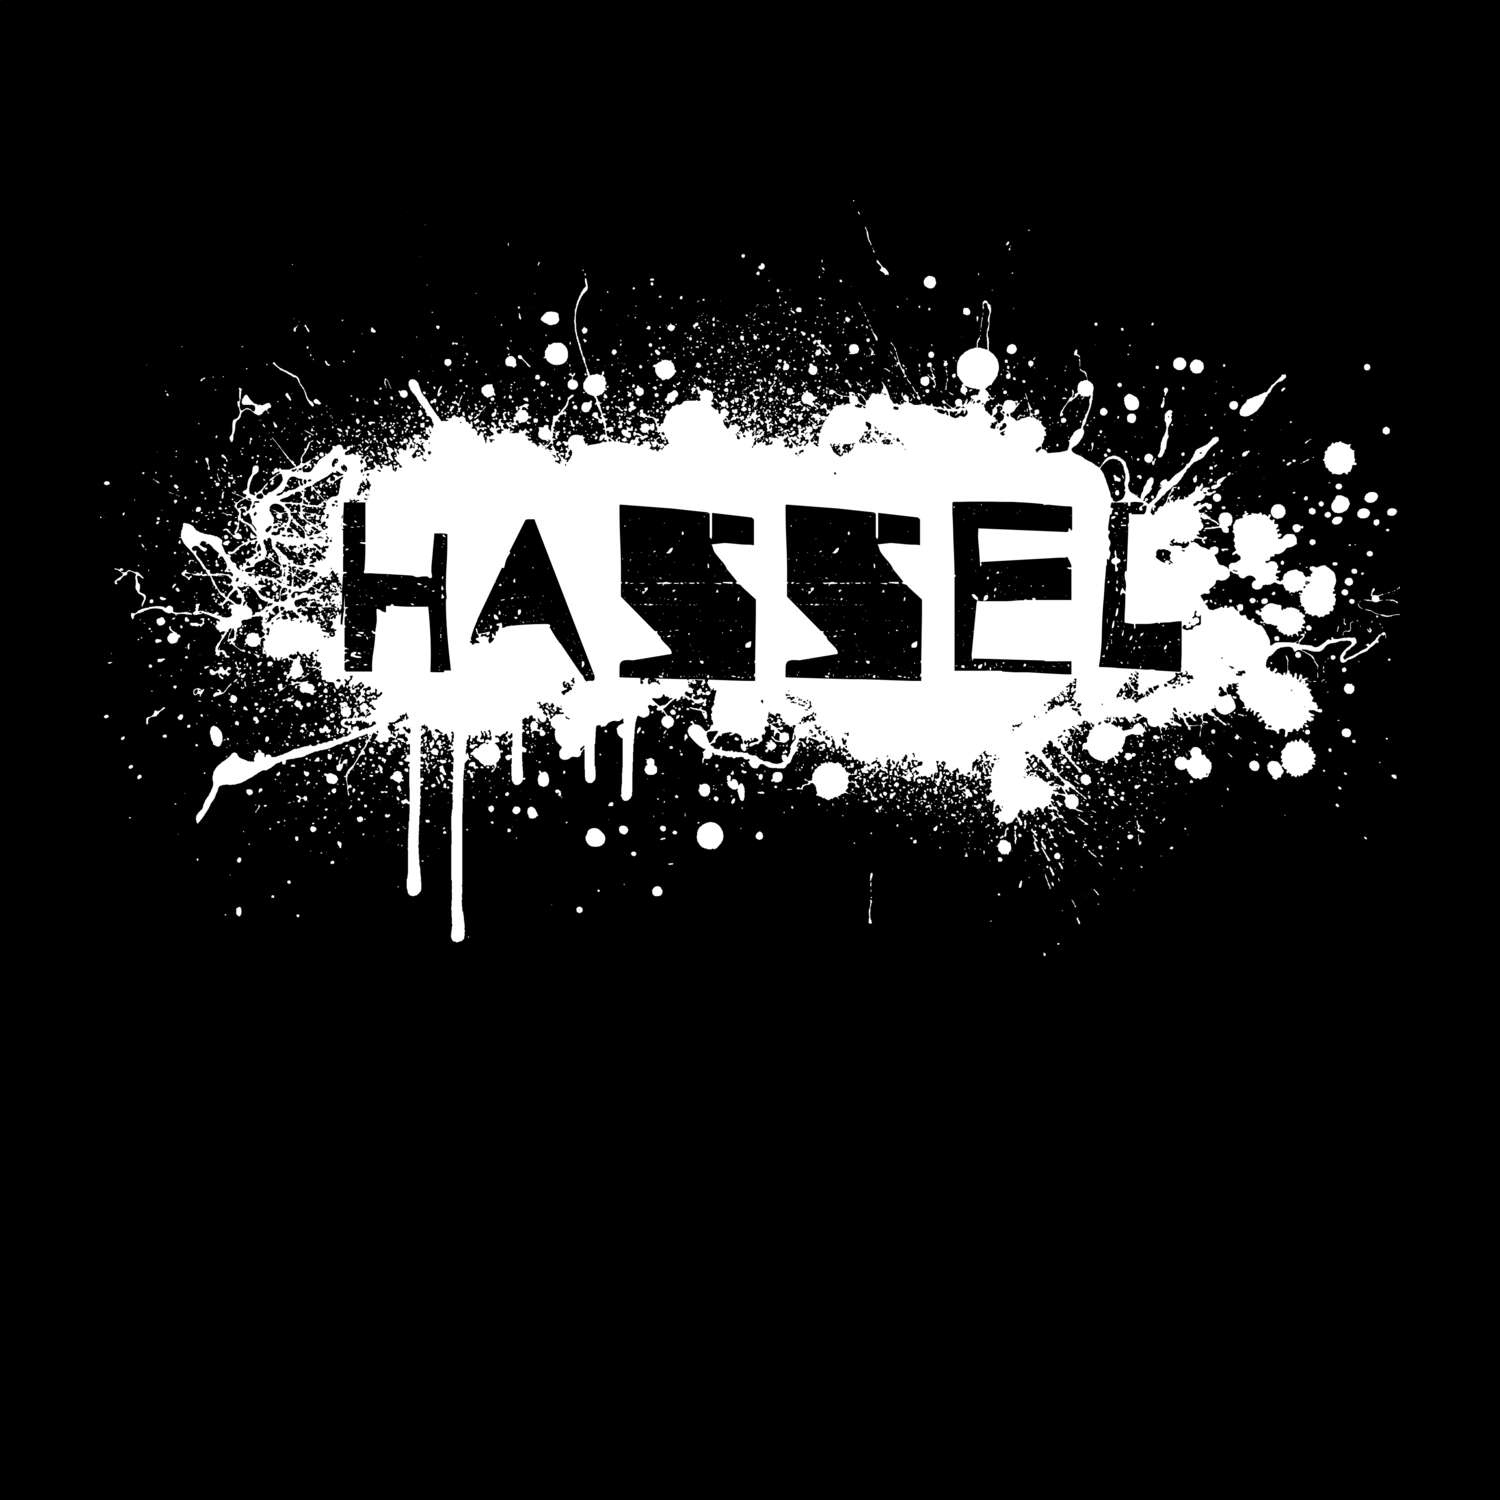 Hassel T-Shirt »Paint Splash Punk«